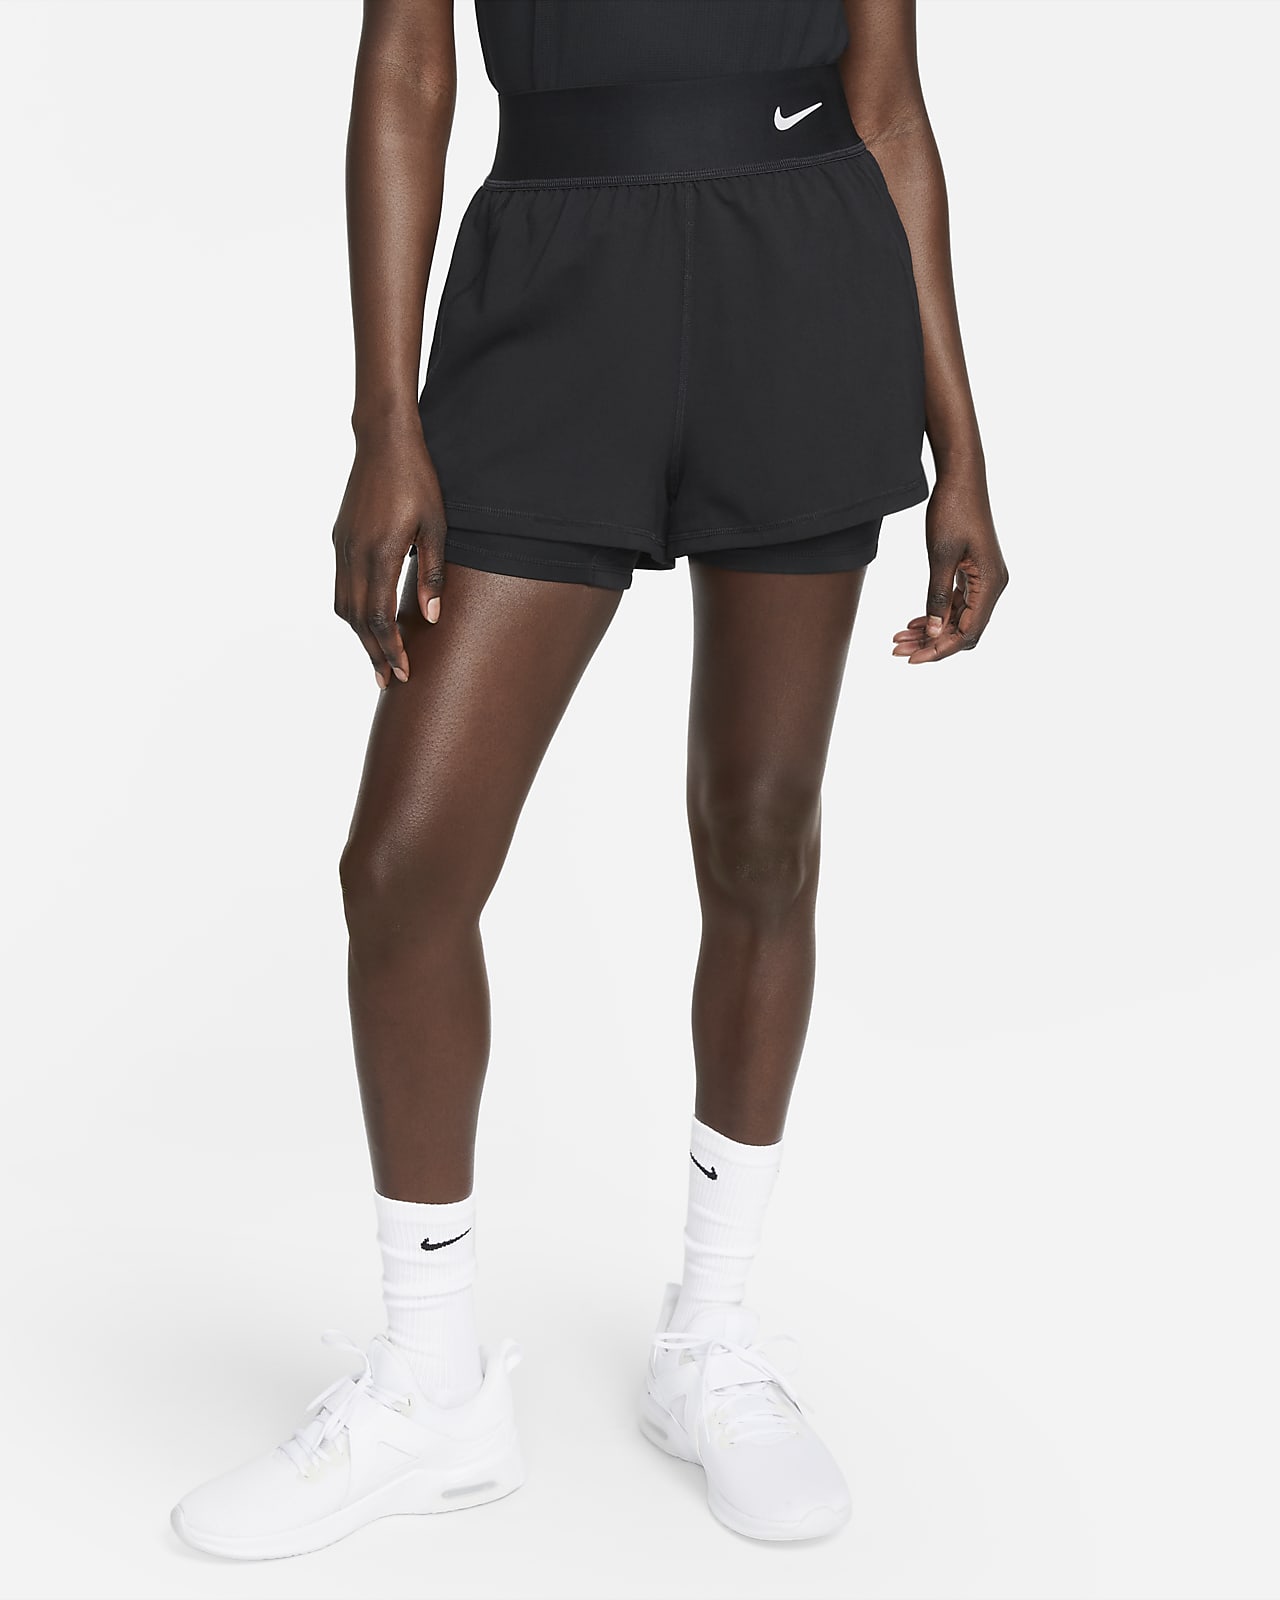 Falda de tenis corta para mujer Nike Dri-FIT Advantage